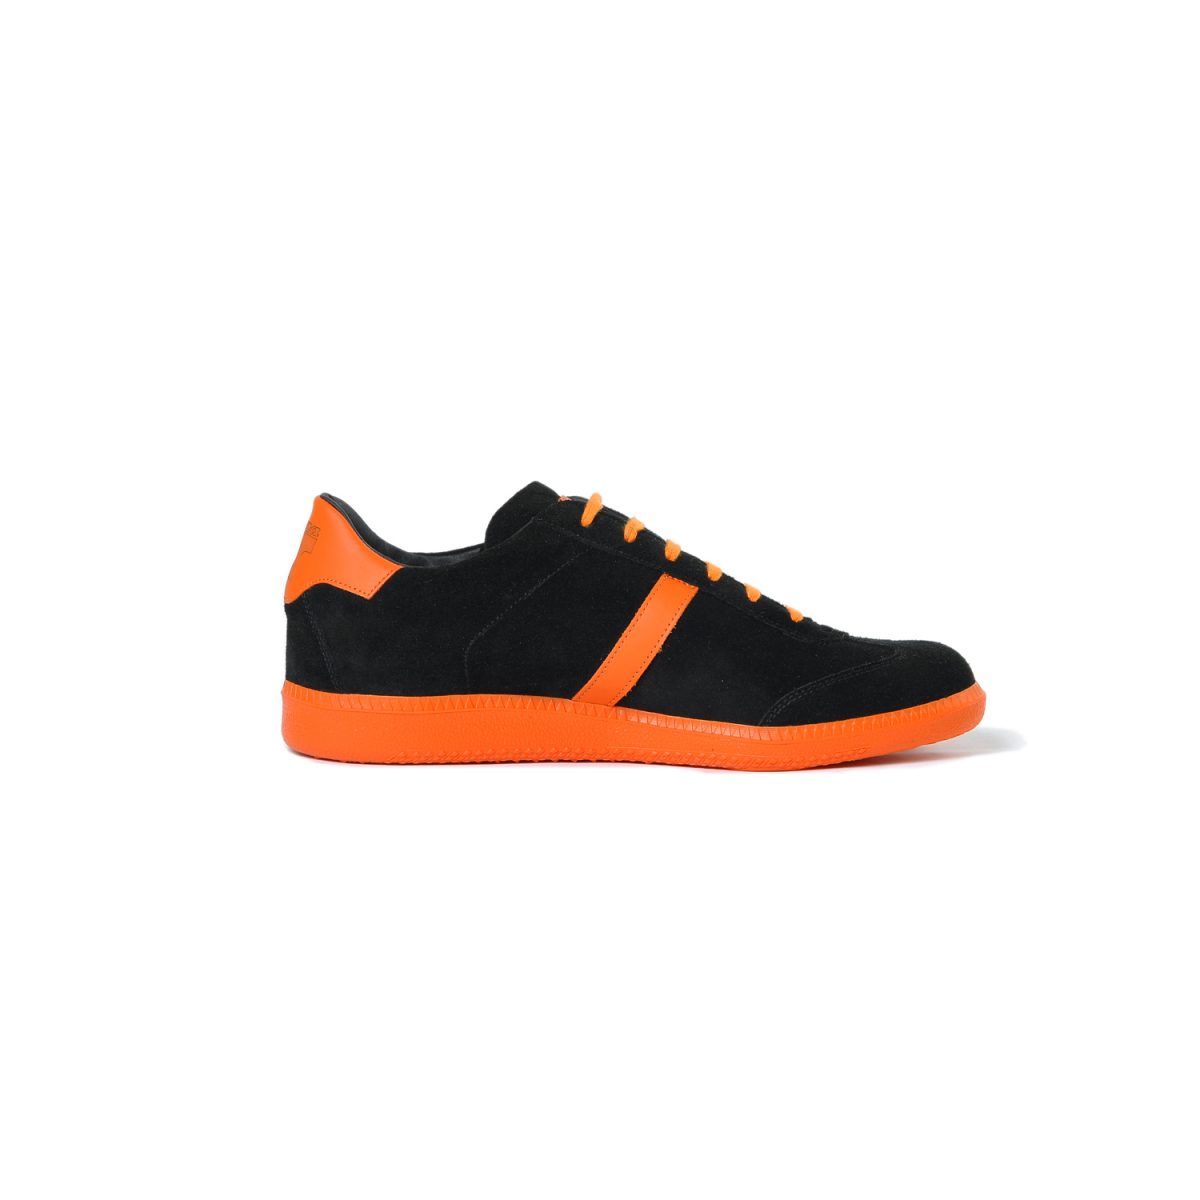 Tisza shoes - Comfort - Black-orange